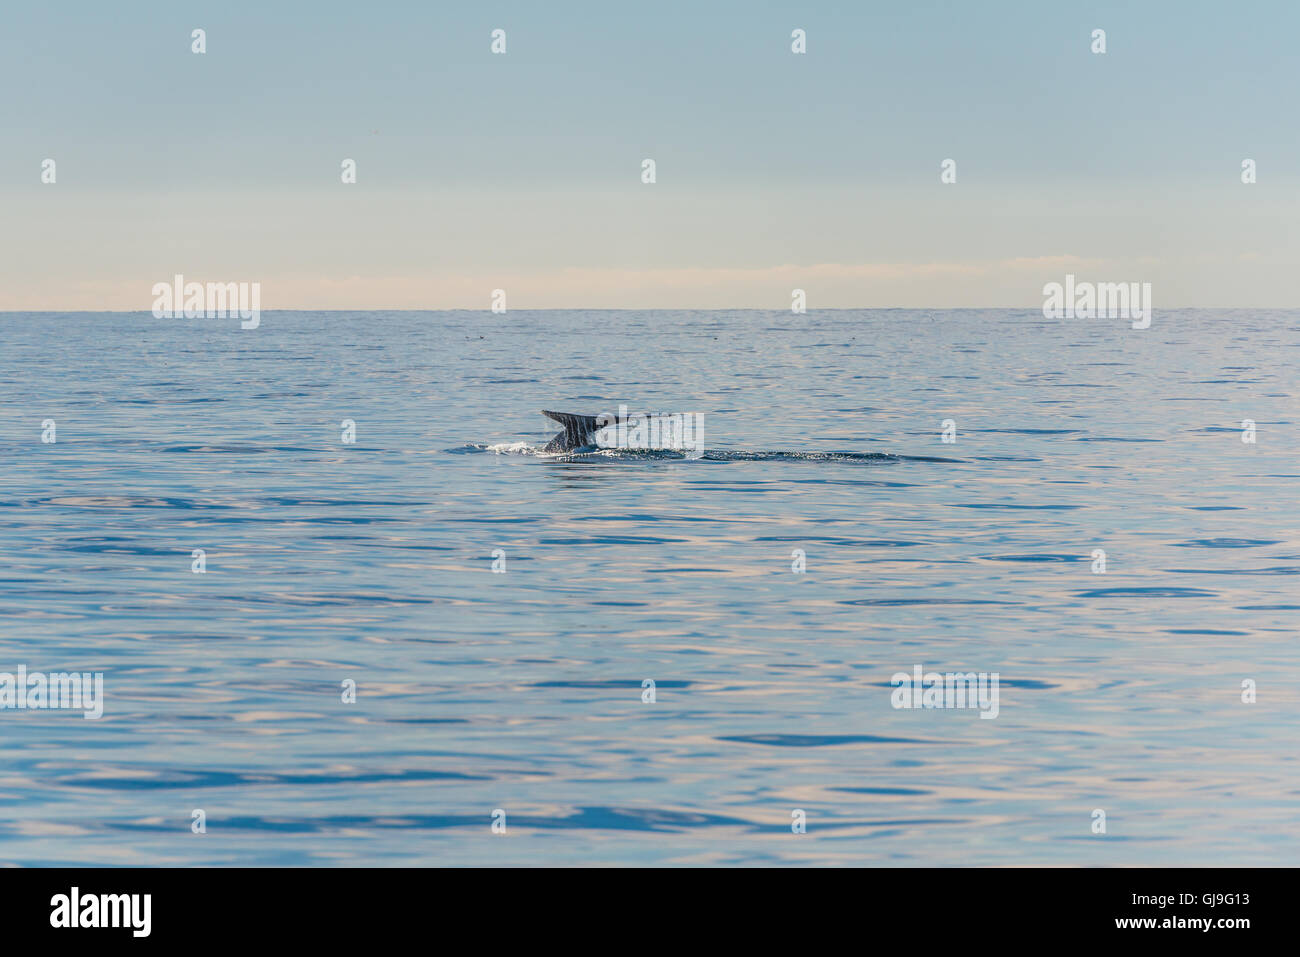 Humpback Whale Foto Stock